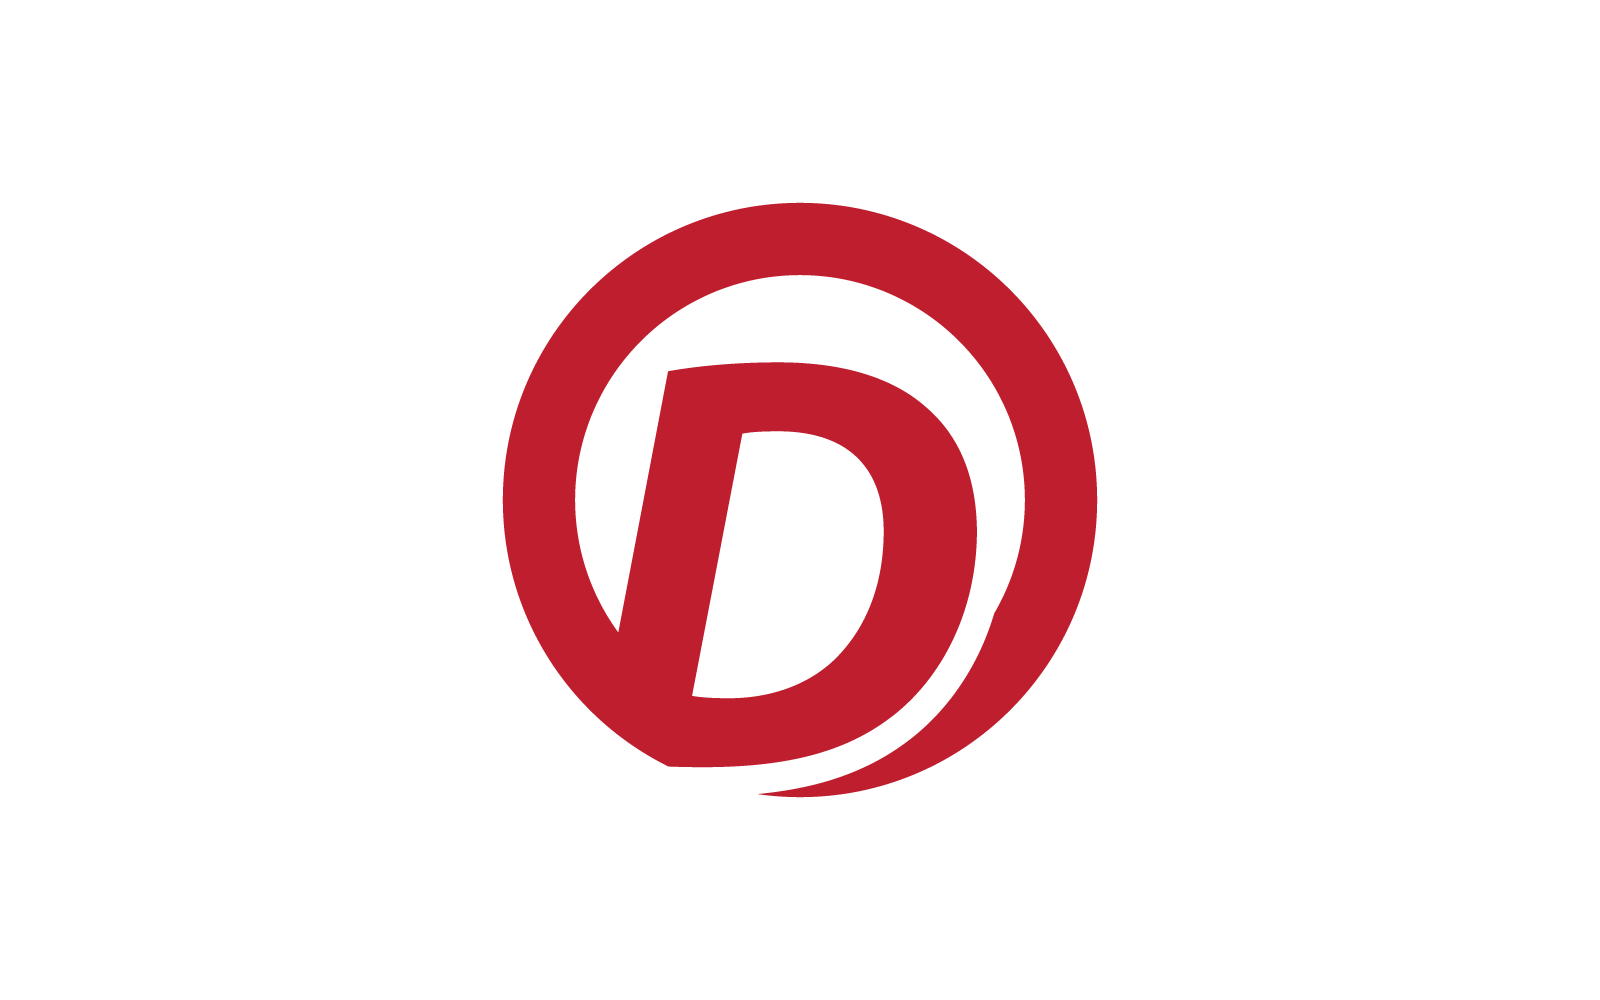 Modern D Initial letter alphabet font logo vector design Logo Template